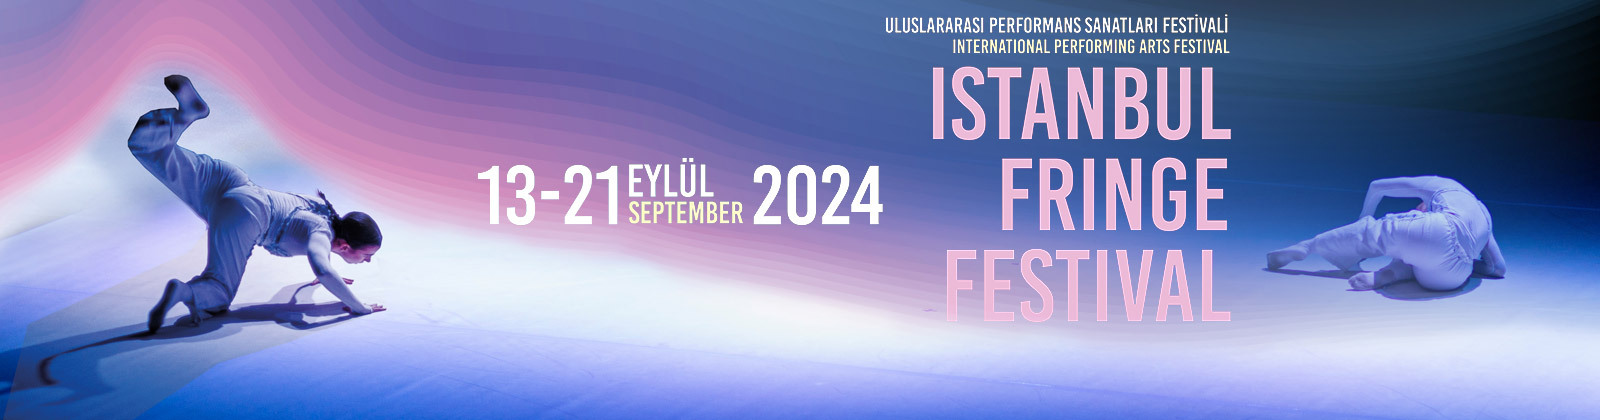 İstanbul Fringe Festival